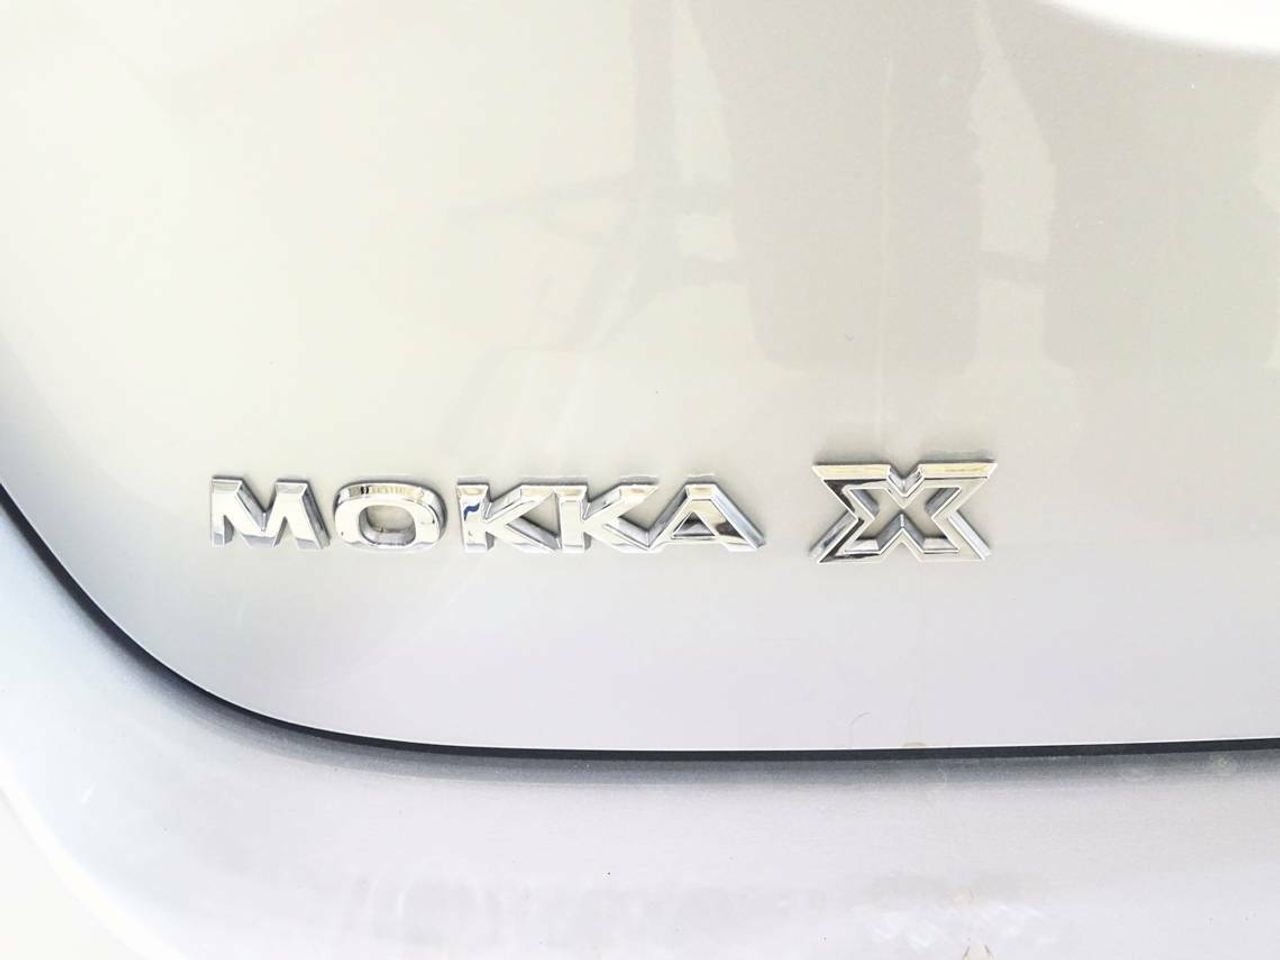 Opel Mokka X Innovation 1.4 T 103kW  ( 140cv ) 4X2   Auto  - Foto 2